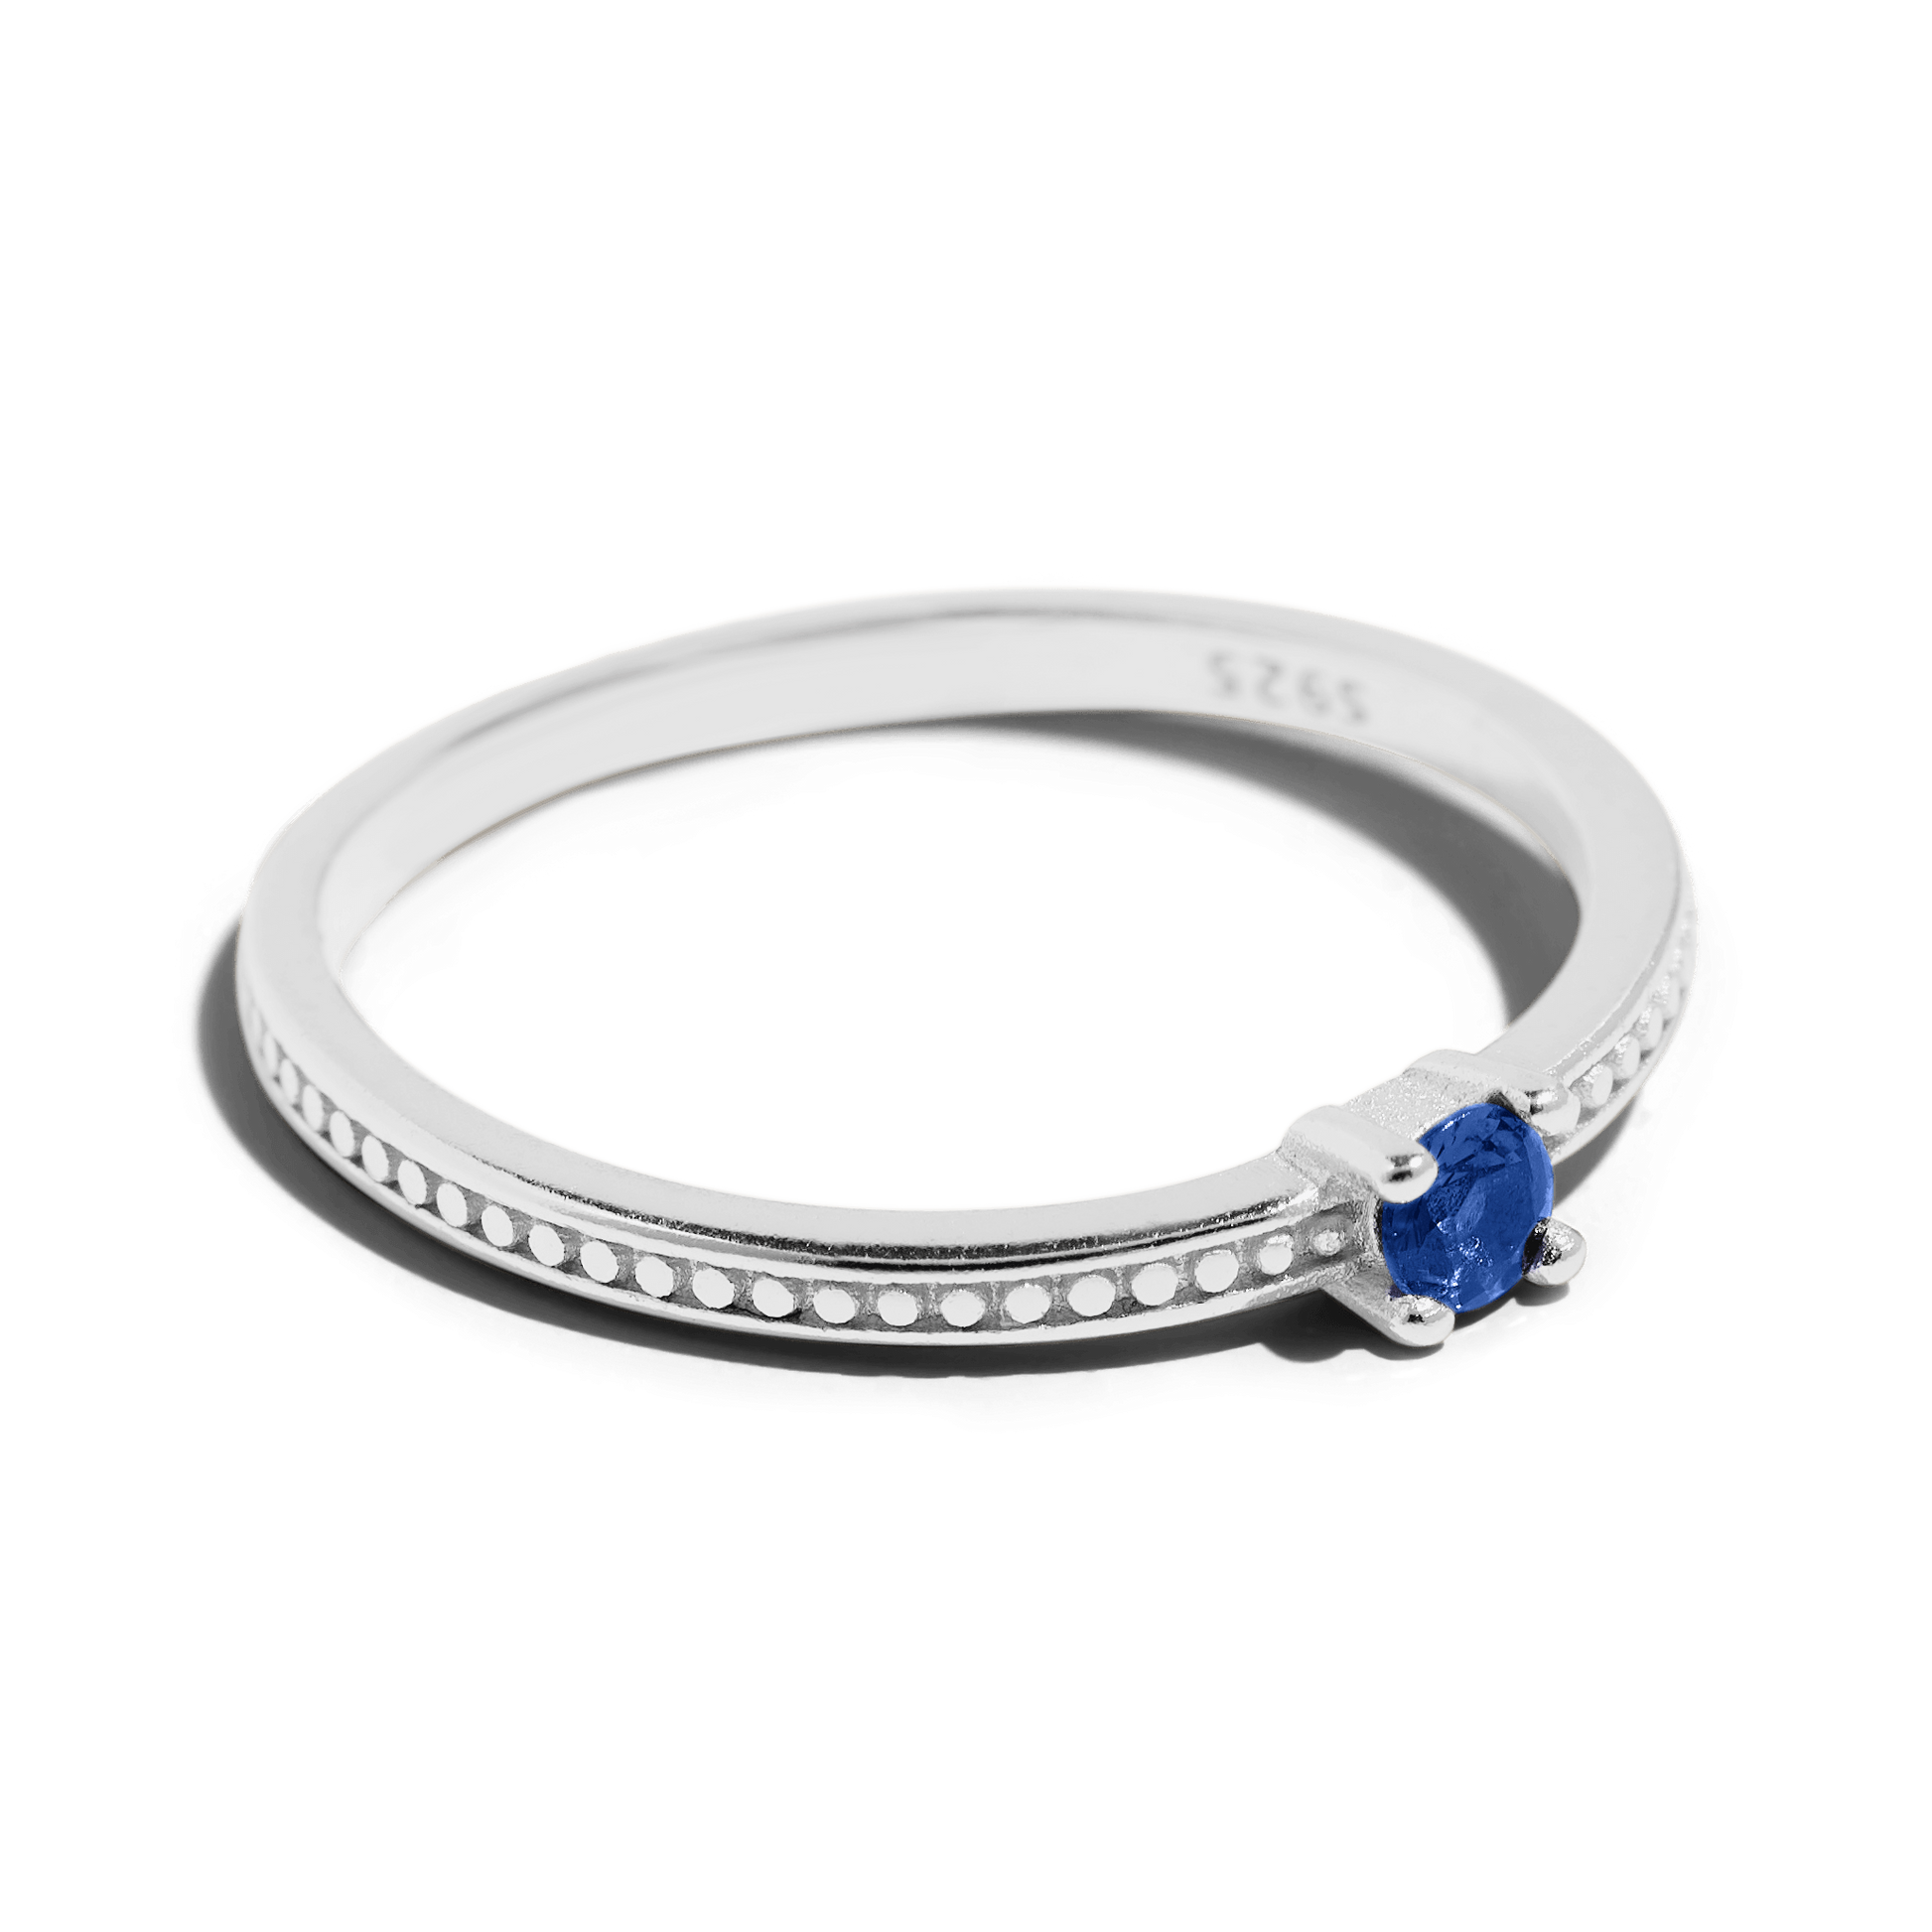 Gemstone ring, Sustainable jewelry